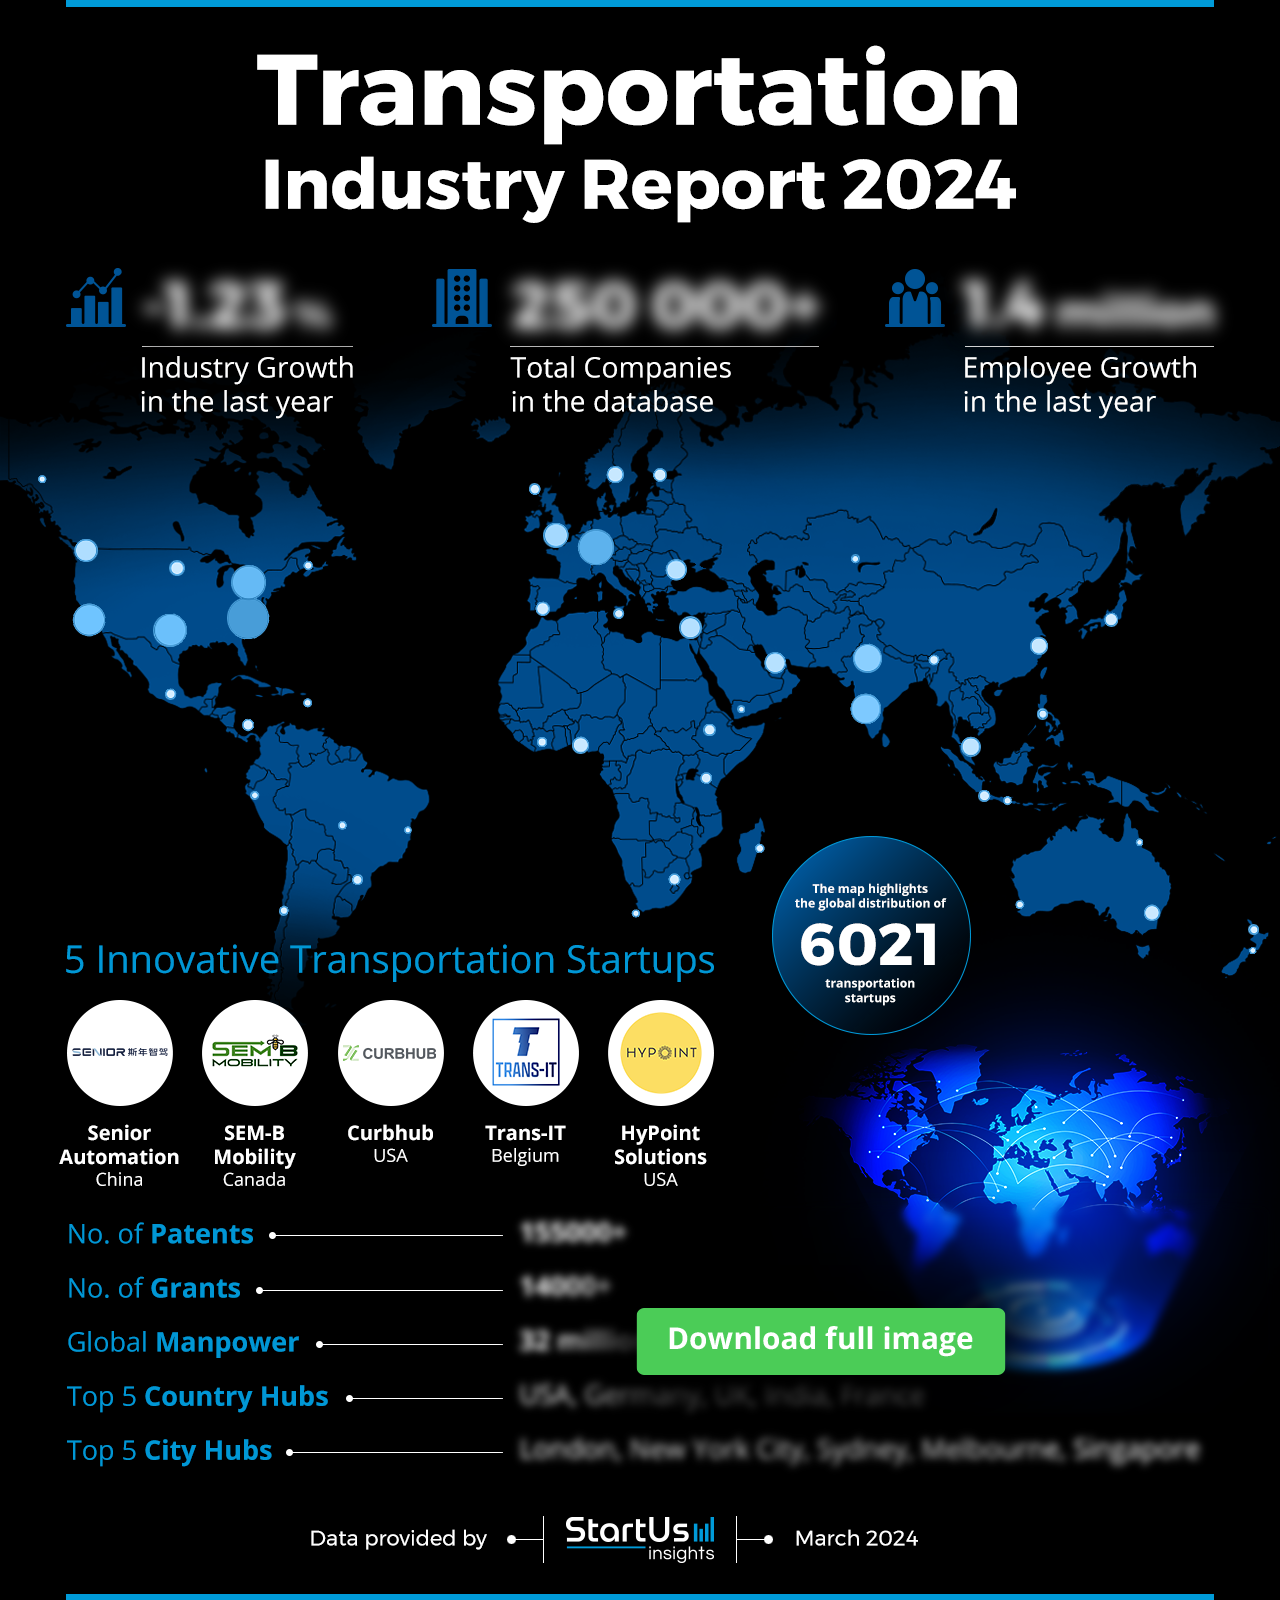 Transportation-Industry-Report-HeatMap-Blurred-StartUs-Insights-noresize